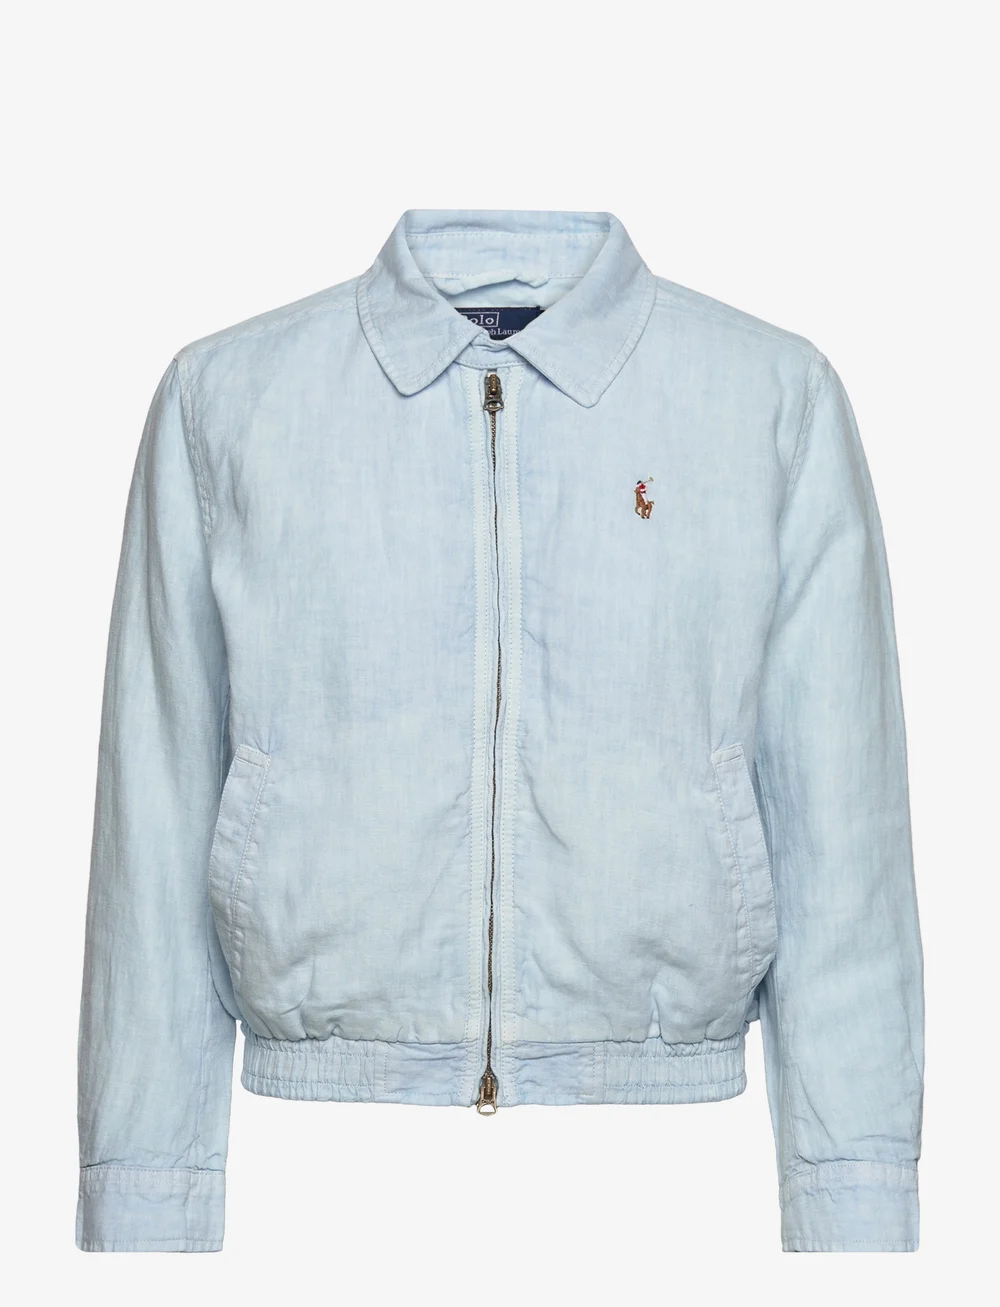 Polo Ralph Lauren Linen Windbreaker - 349 €. Buy Jackets & Coats from Polo Ralph Lauren online at Boozt.com. Fast delivery easy returns